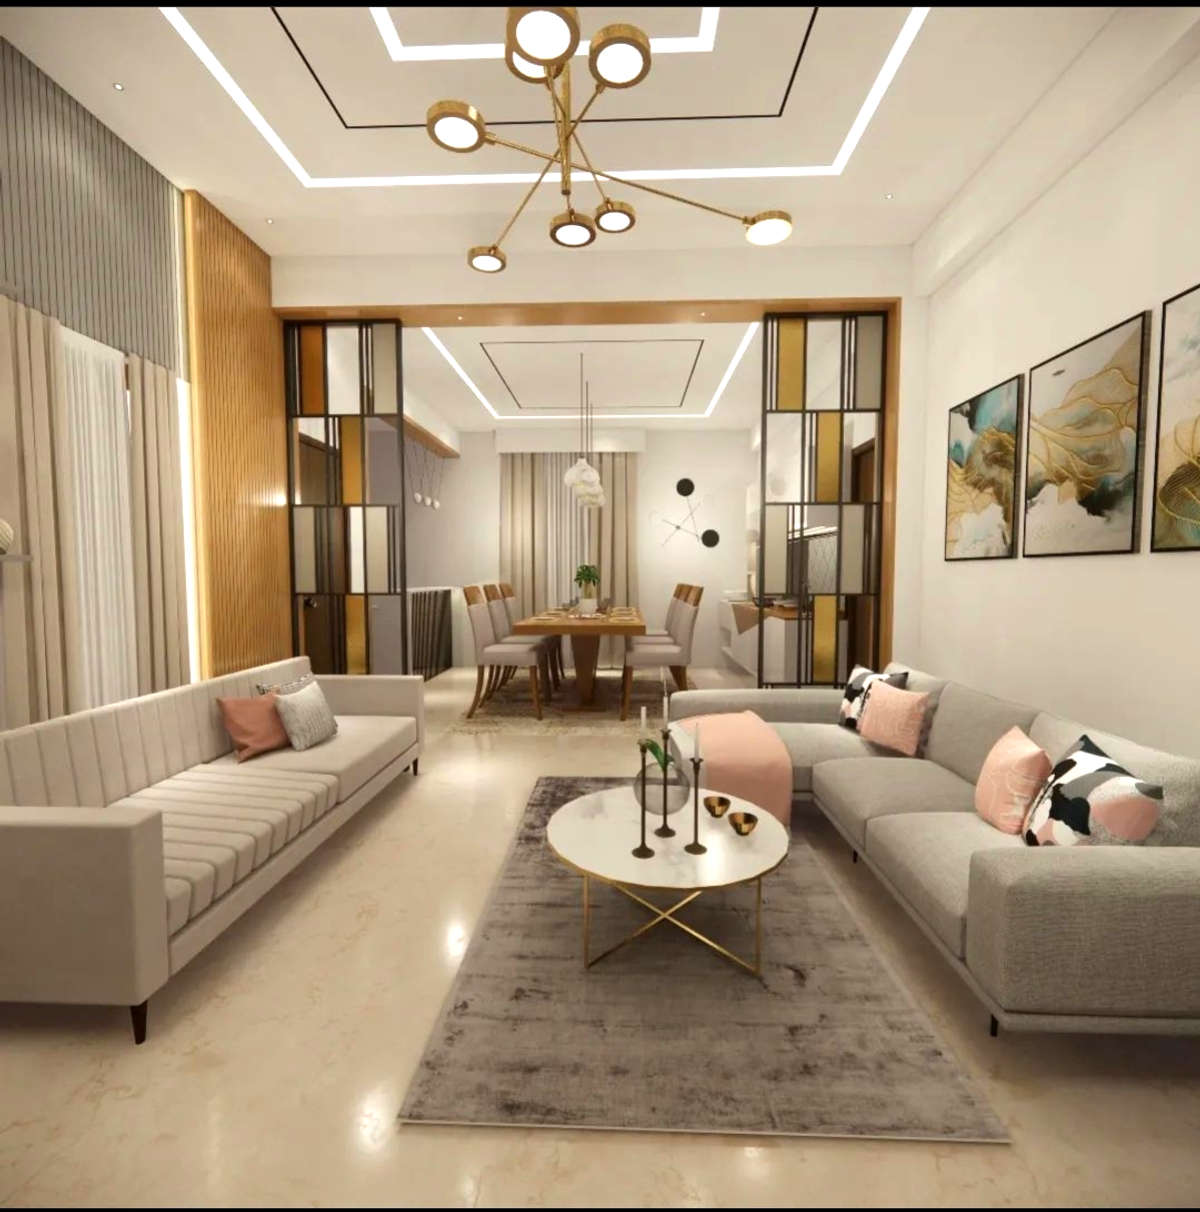 Living room interior design 
#interiordesign
#homeinterior
#modular_kitchen
#latestkitchendesign
#interiordesigner
#roomdecor
#drawingroom
#BedroomDesigns
#masterbedroom
#livingroom
WWW.MAJESTICINTERIORS.CO.IN
9911692170